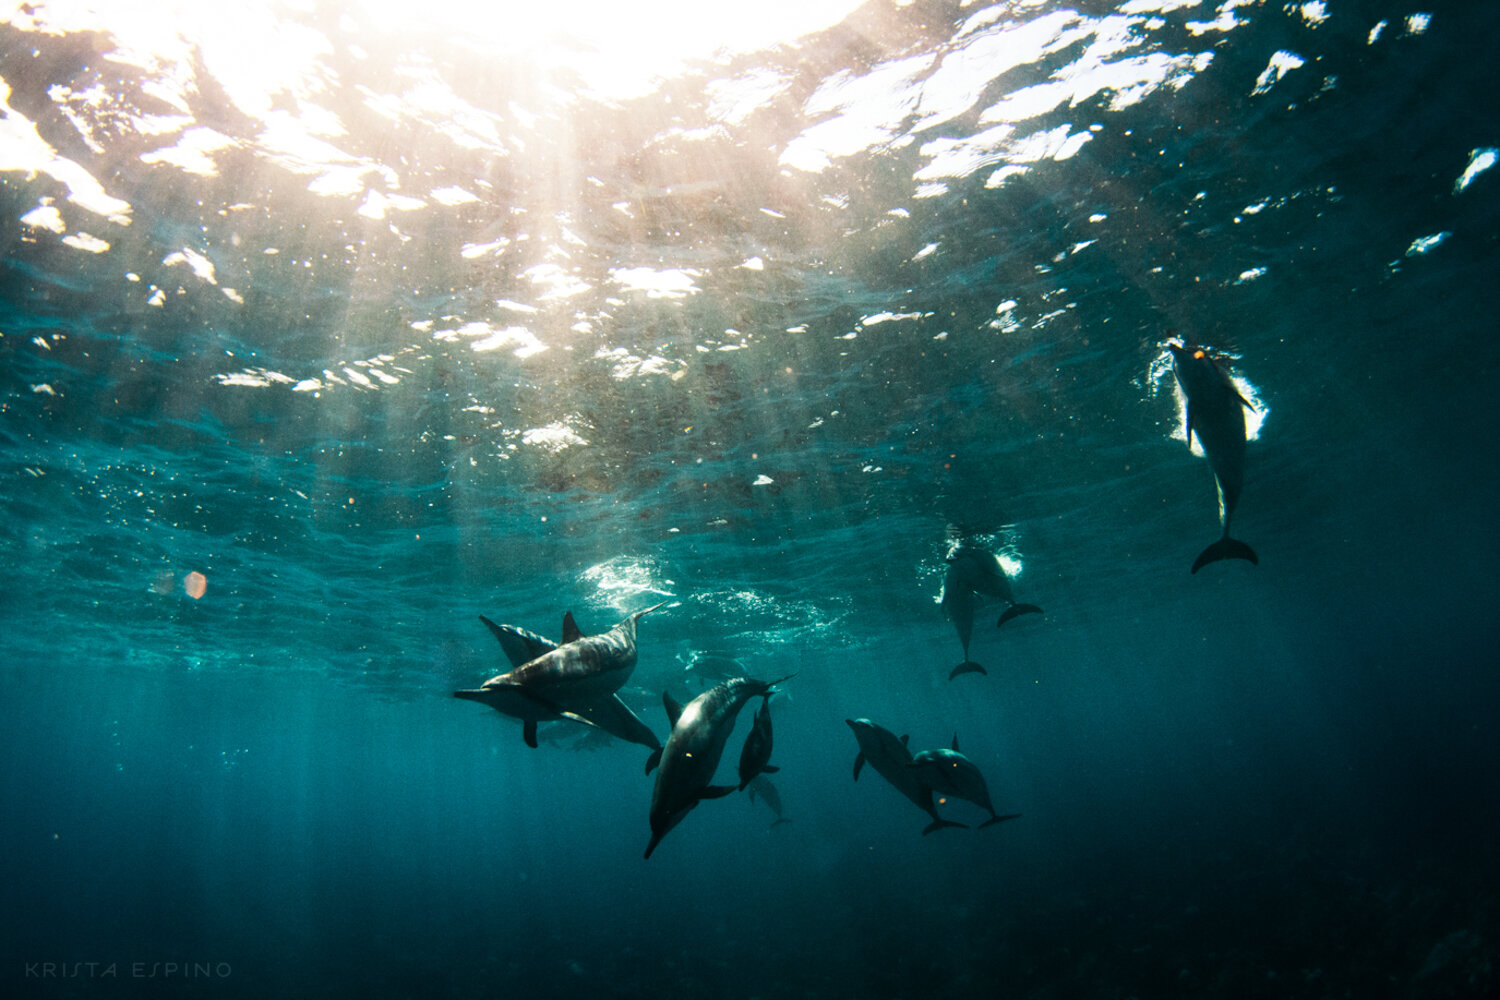 dolphin eco tour wild wildlife sealife lifestyle nature photography photographer krista espino travel underwater swim ocean big island hawaii kona dolphins_-15.jpg